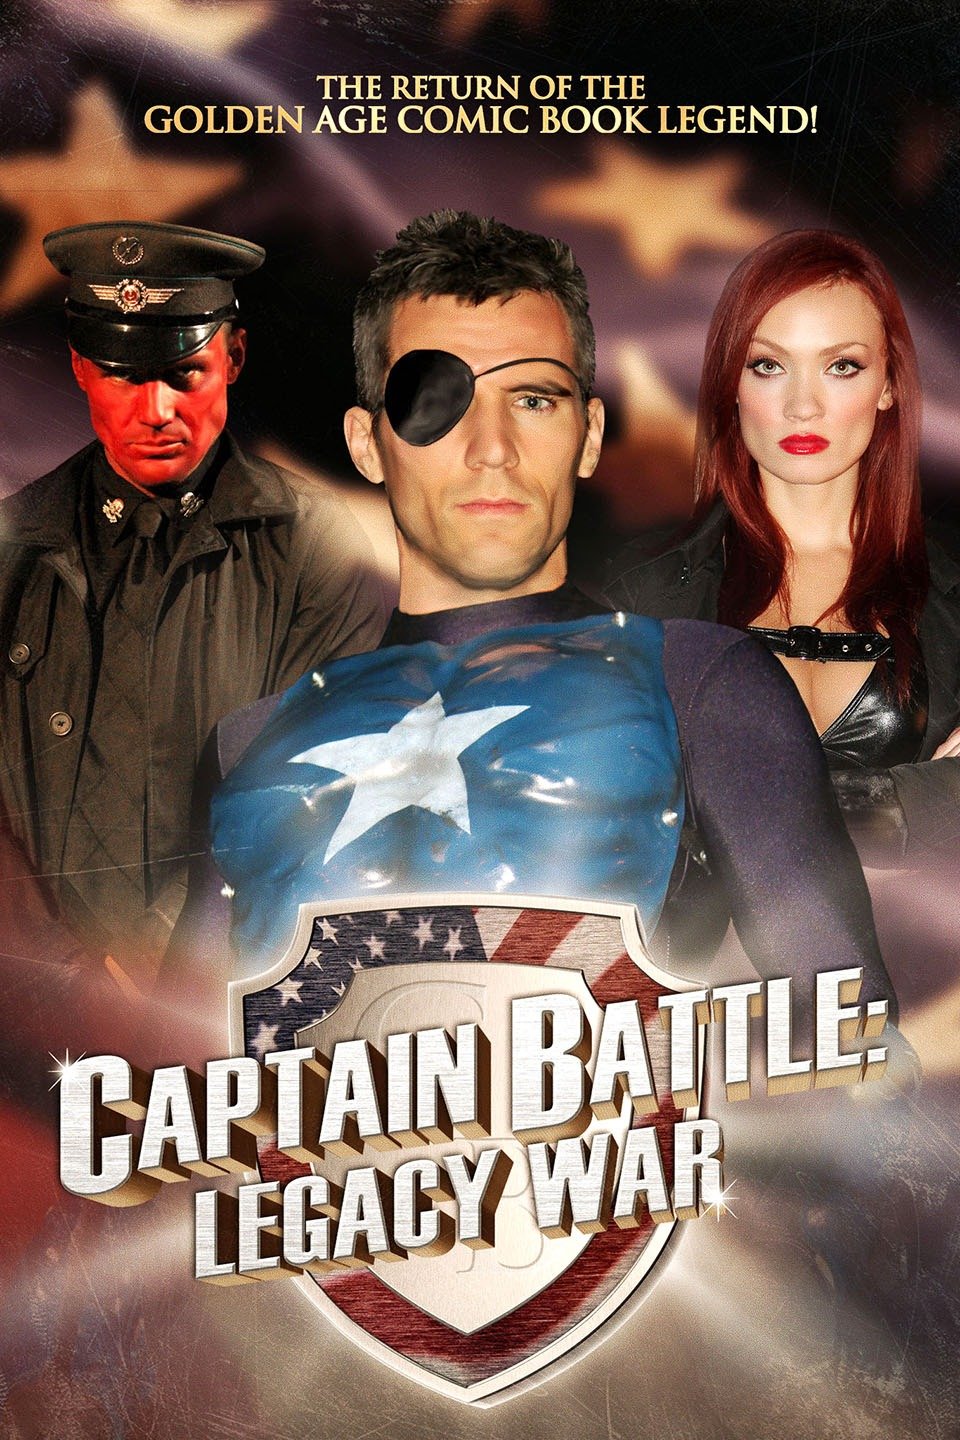 Captain battle legacy war trailer